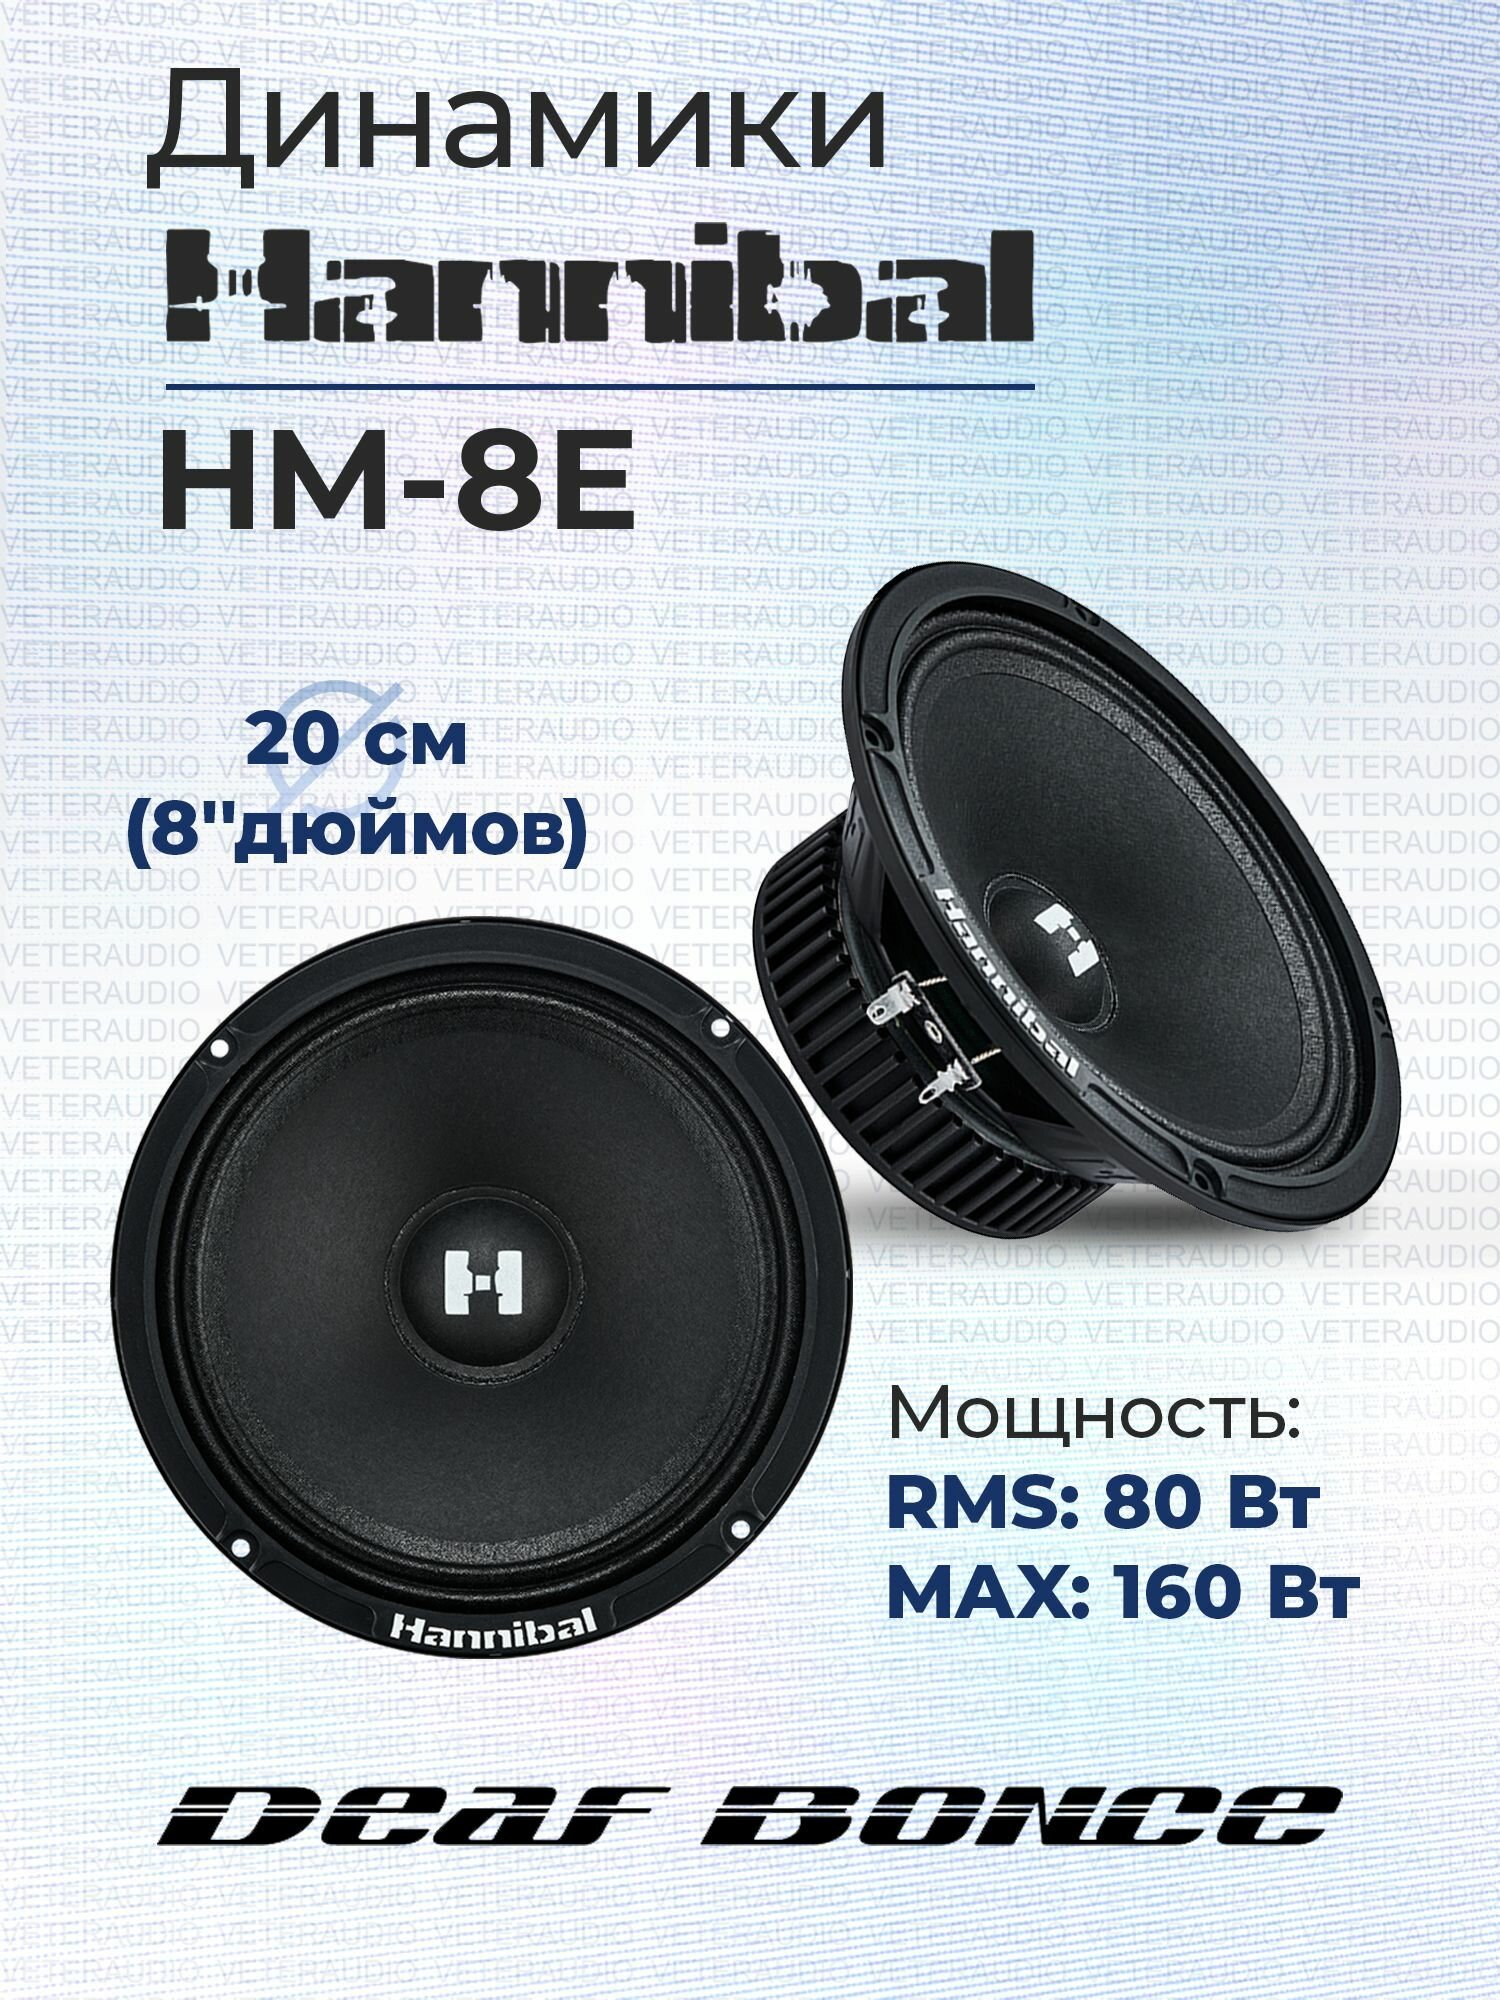 Эстрадная акустика Hannibal HM-8E